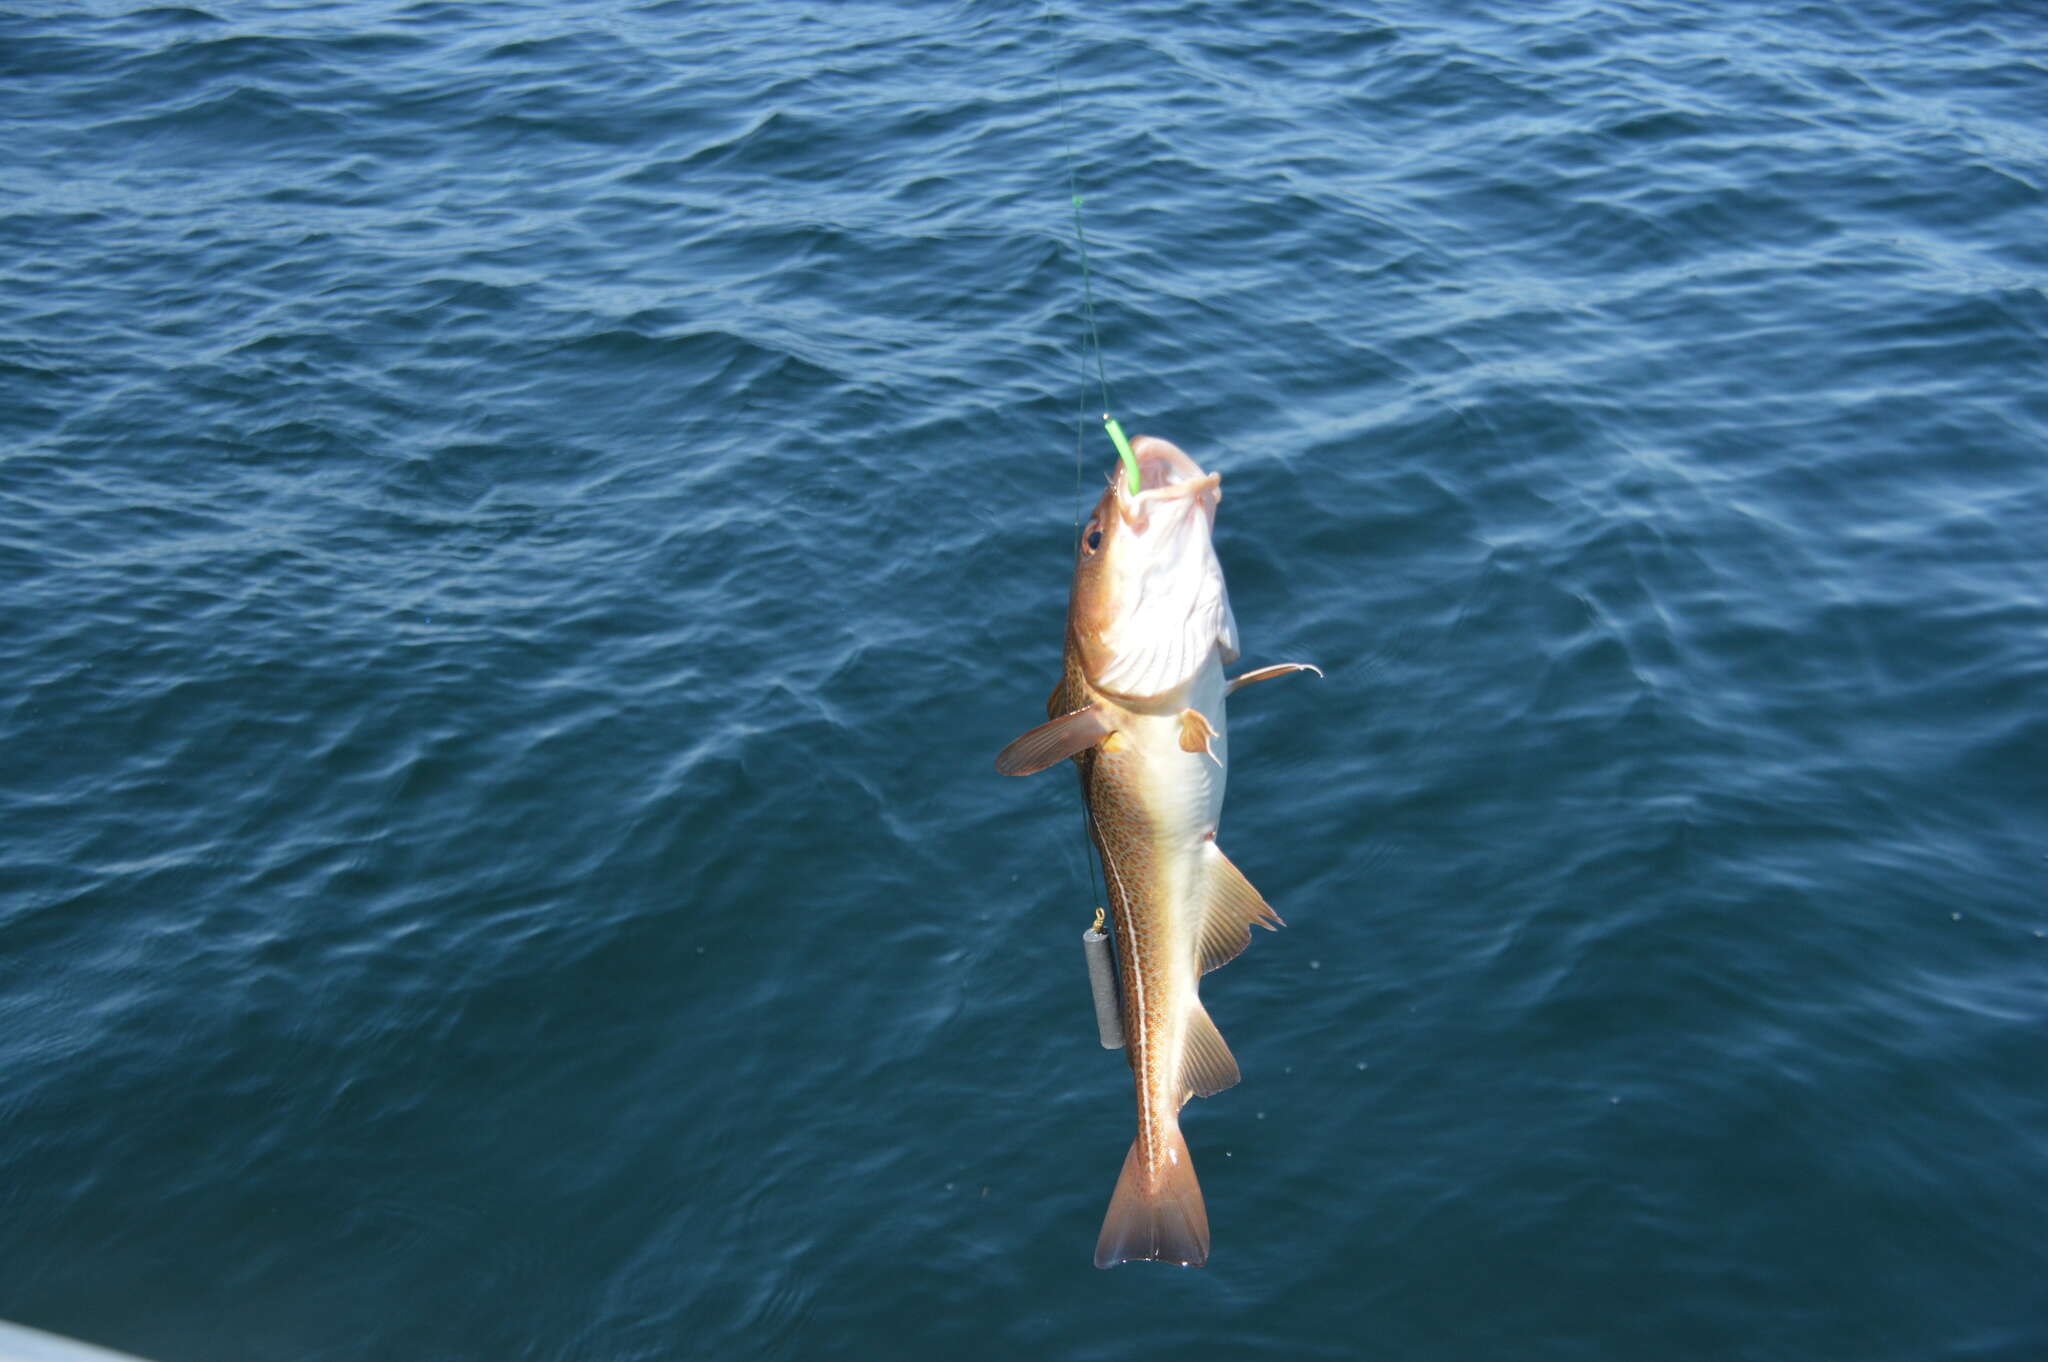 Image of Atlantic cod